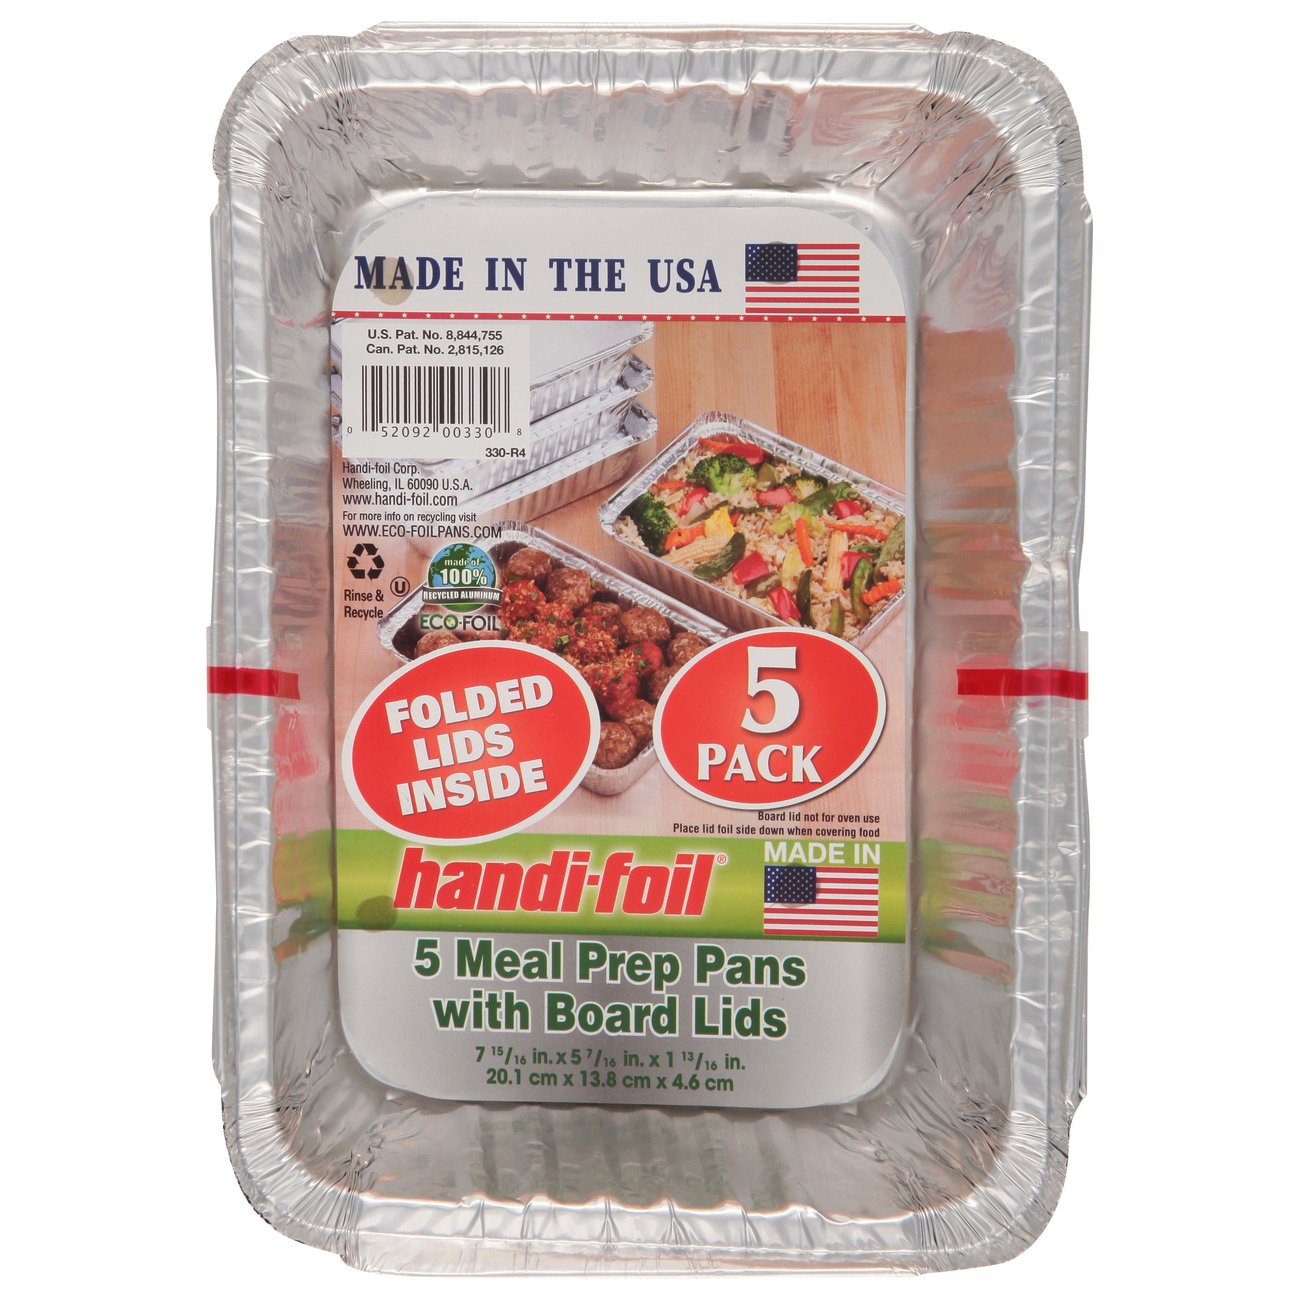 Handi-Foil Meal Prep Pans with Board Lids